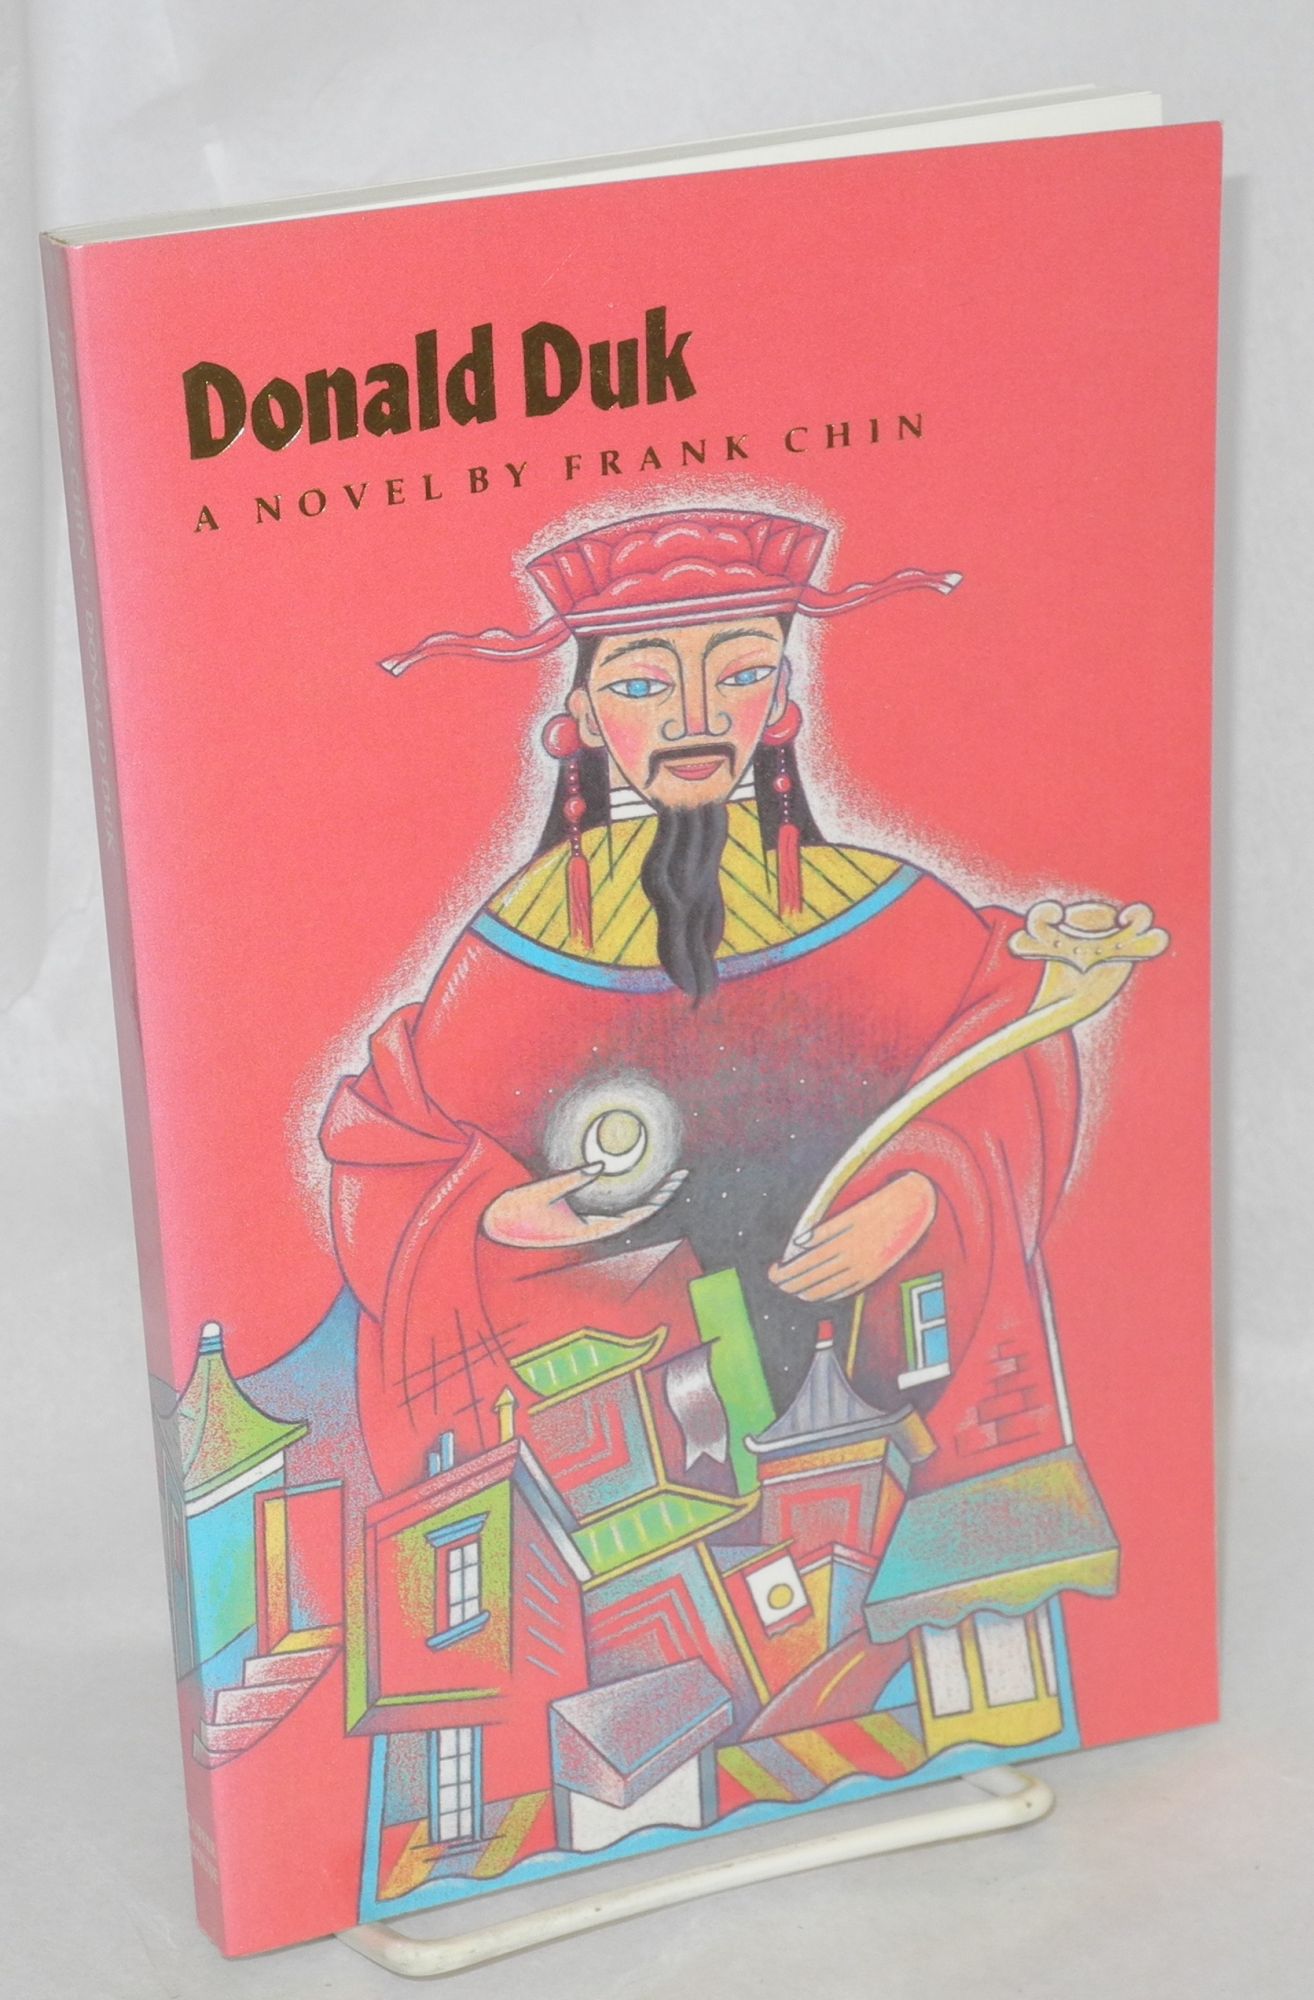 Gran Ficción: Donald Duk de Frank Chin